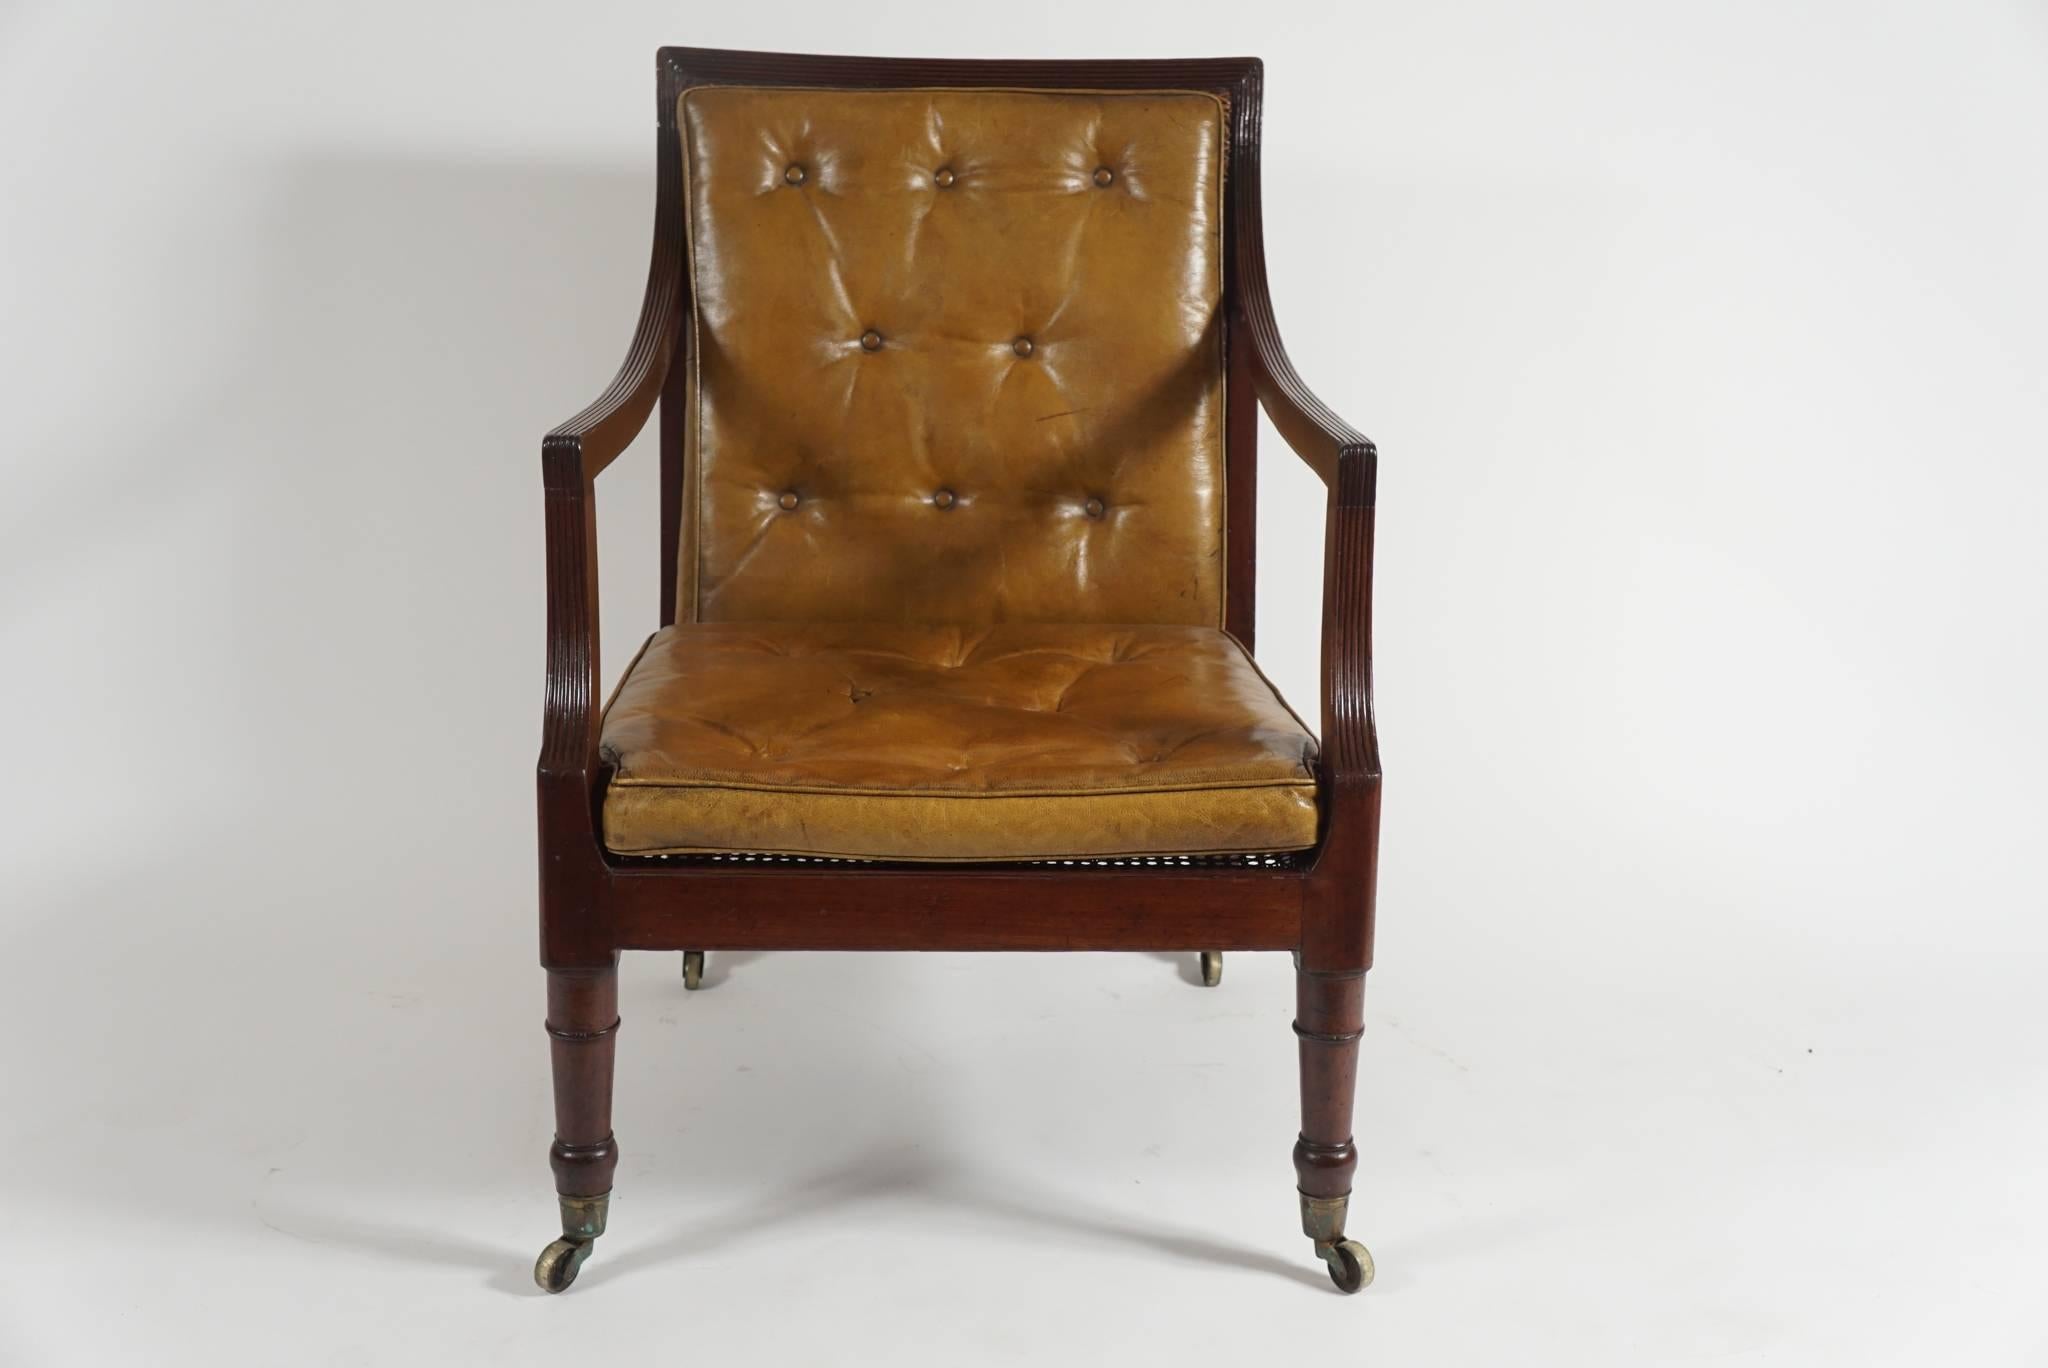 English George III Mahogany & Cane Arm or Library Chair, England, c. 1800